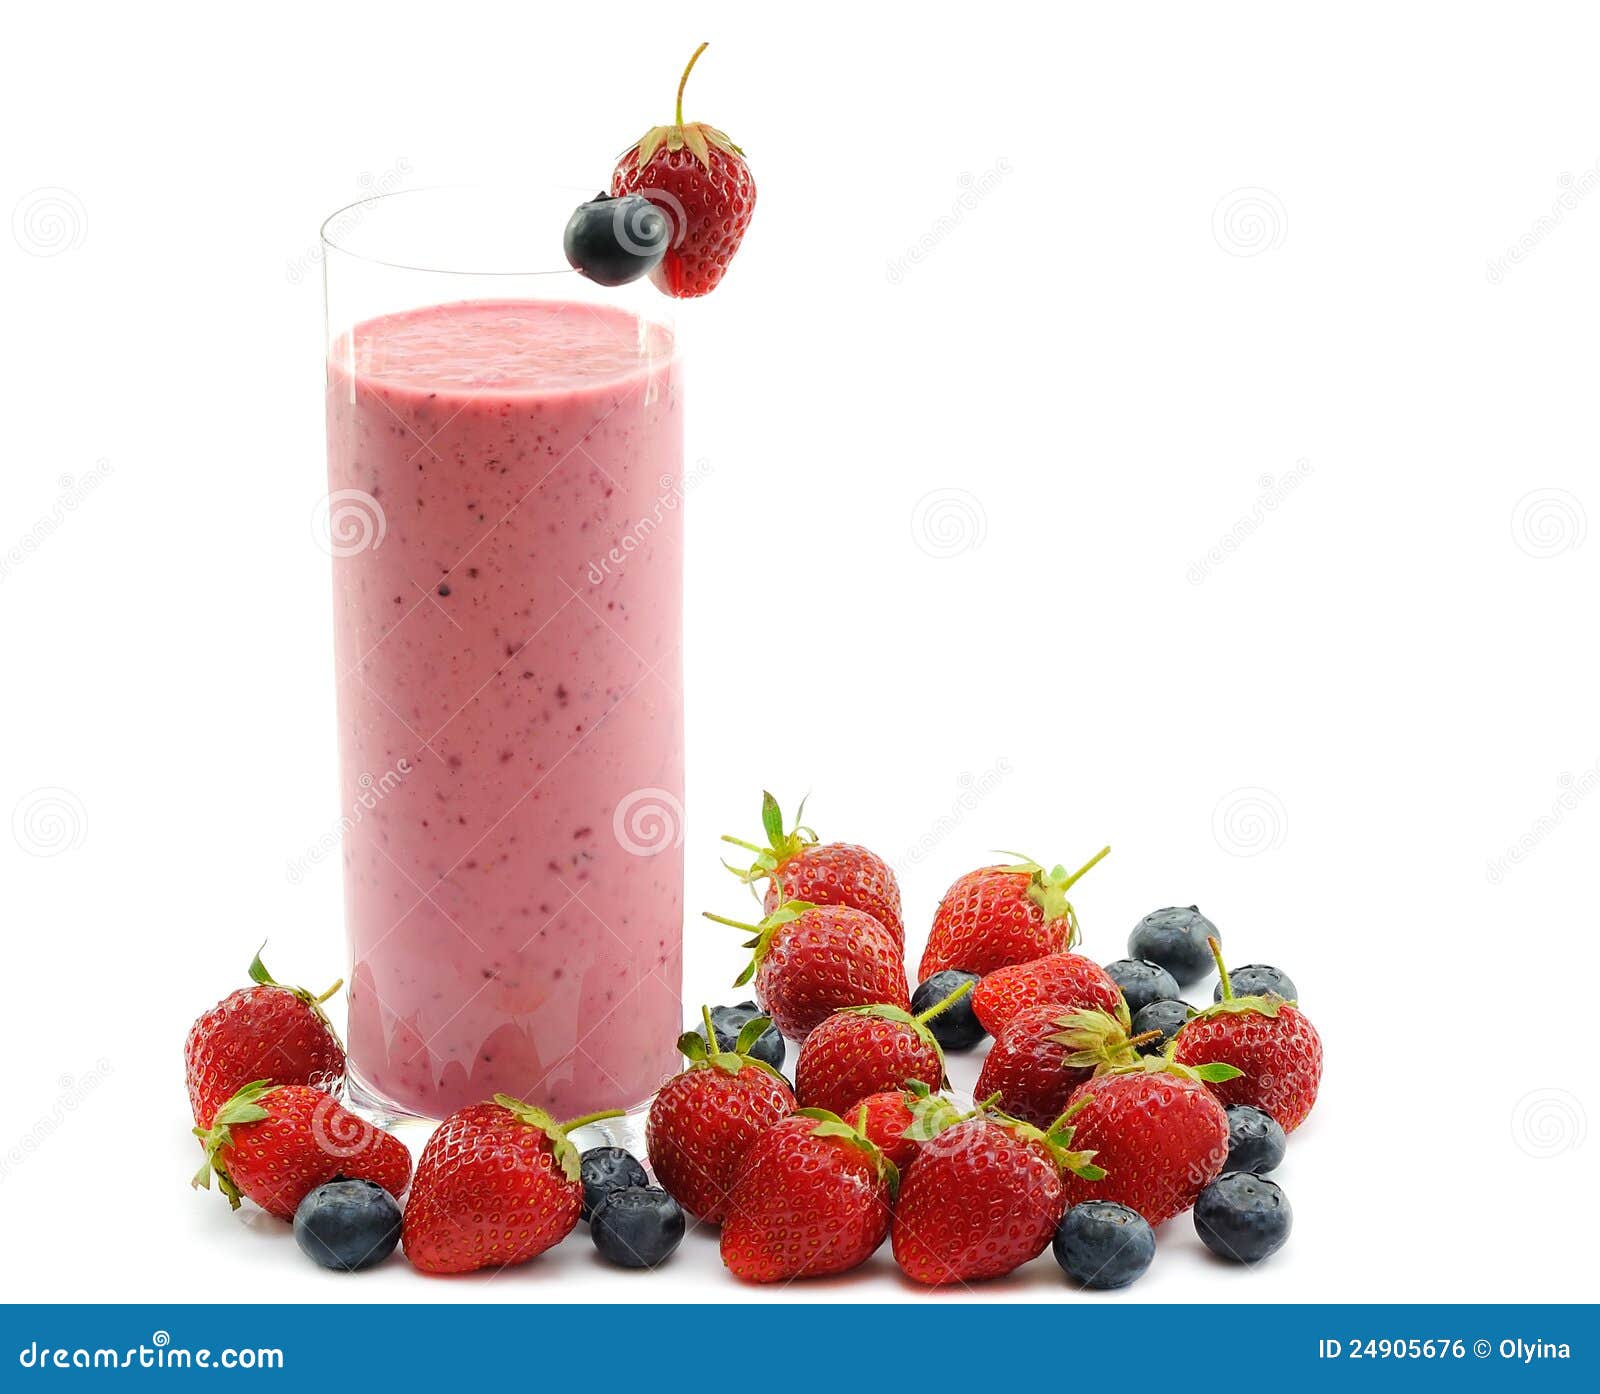 strawberry smoothie clip art - photo #31